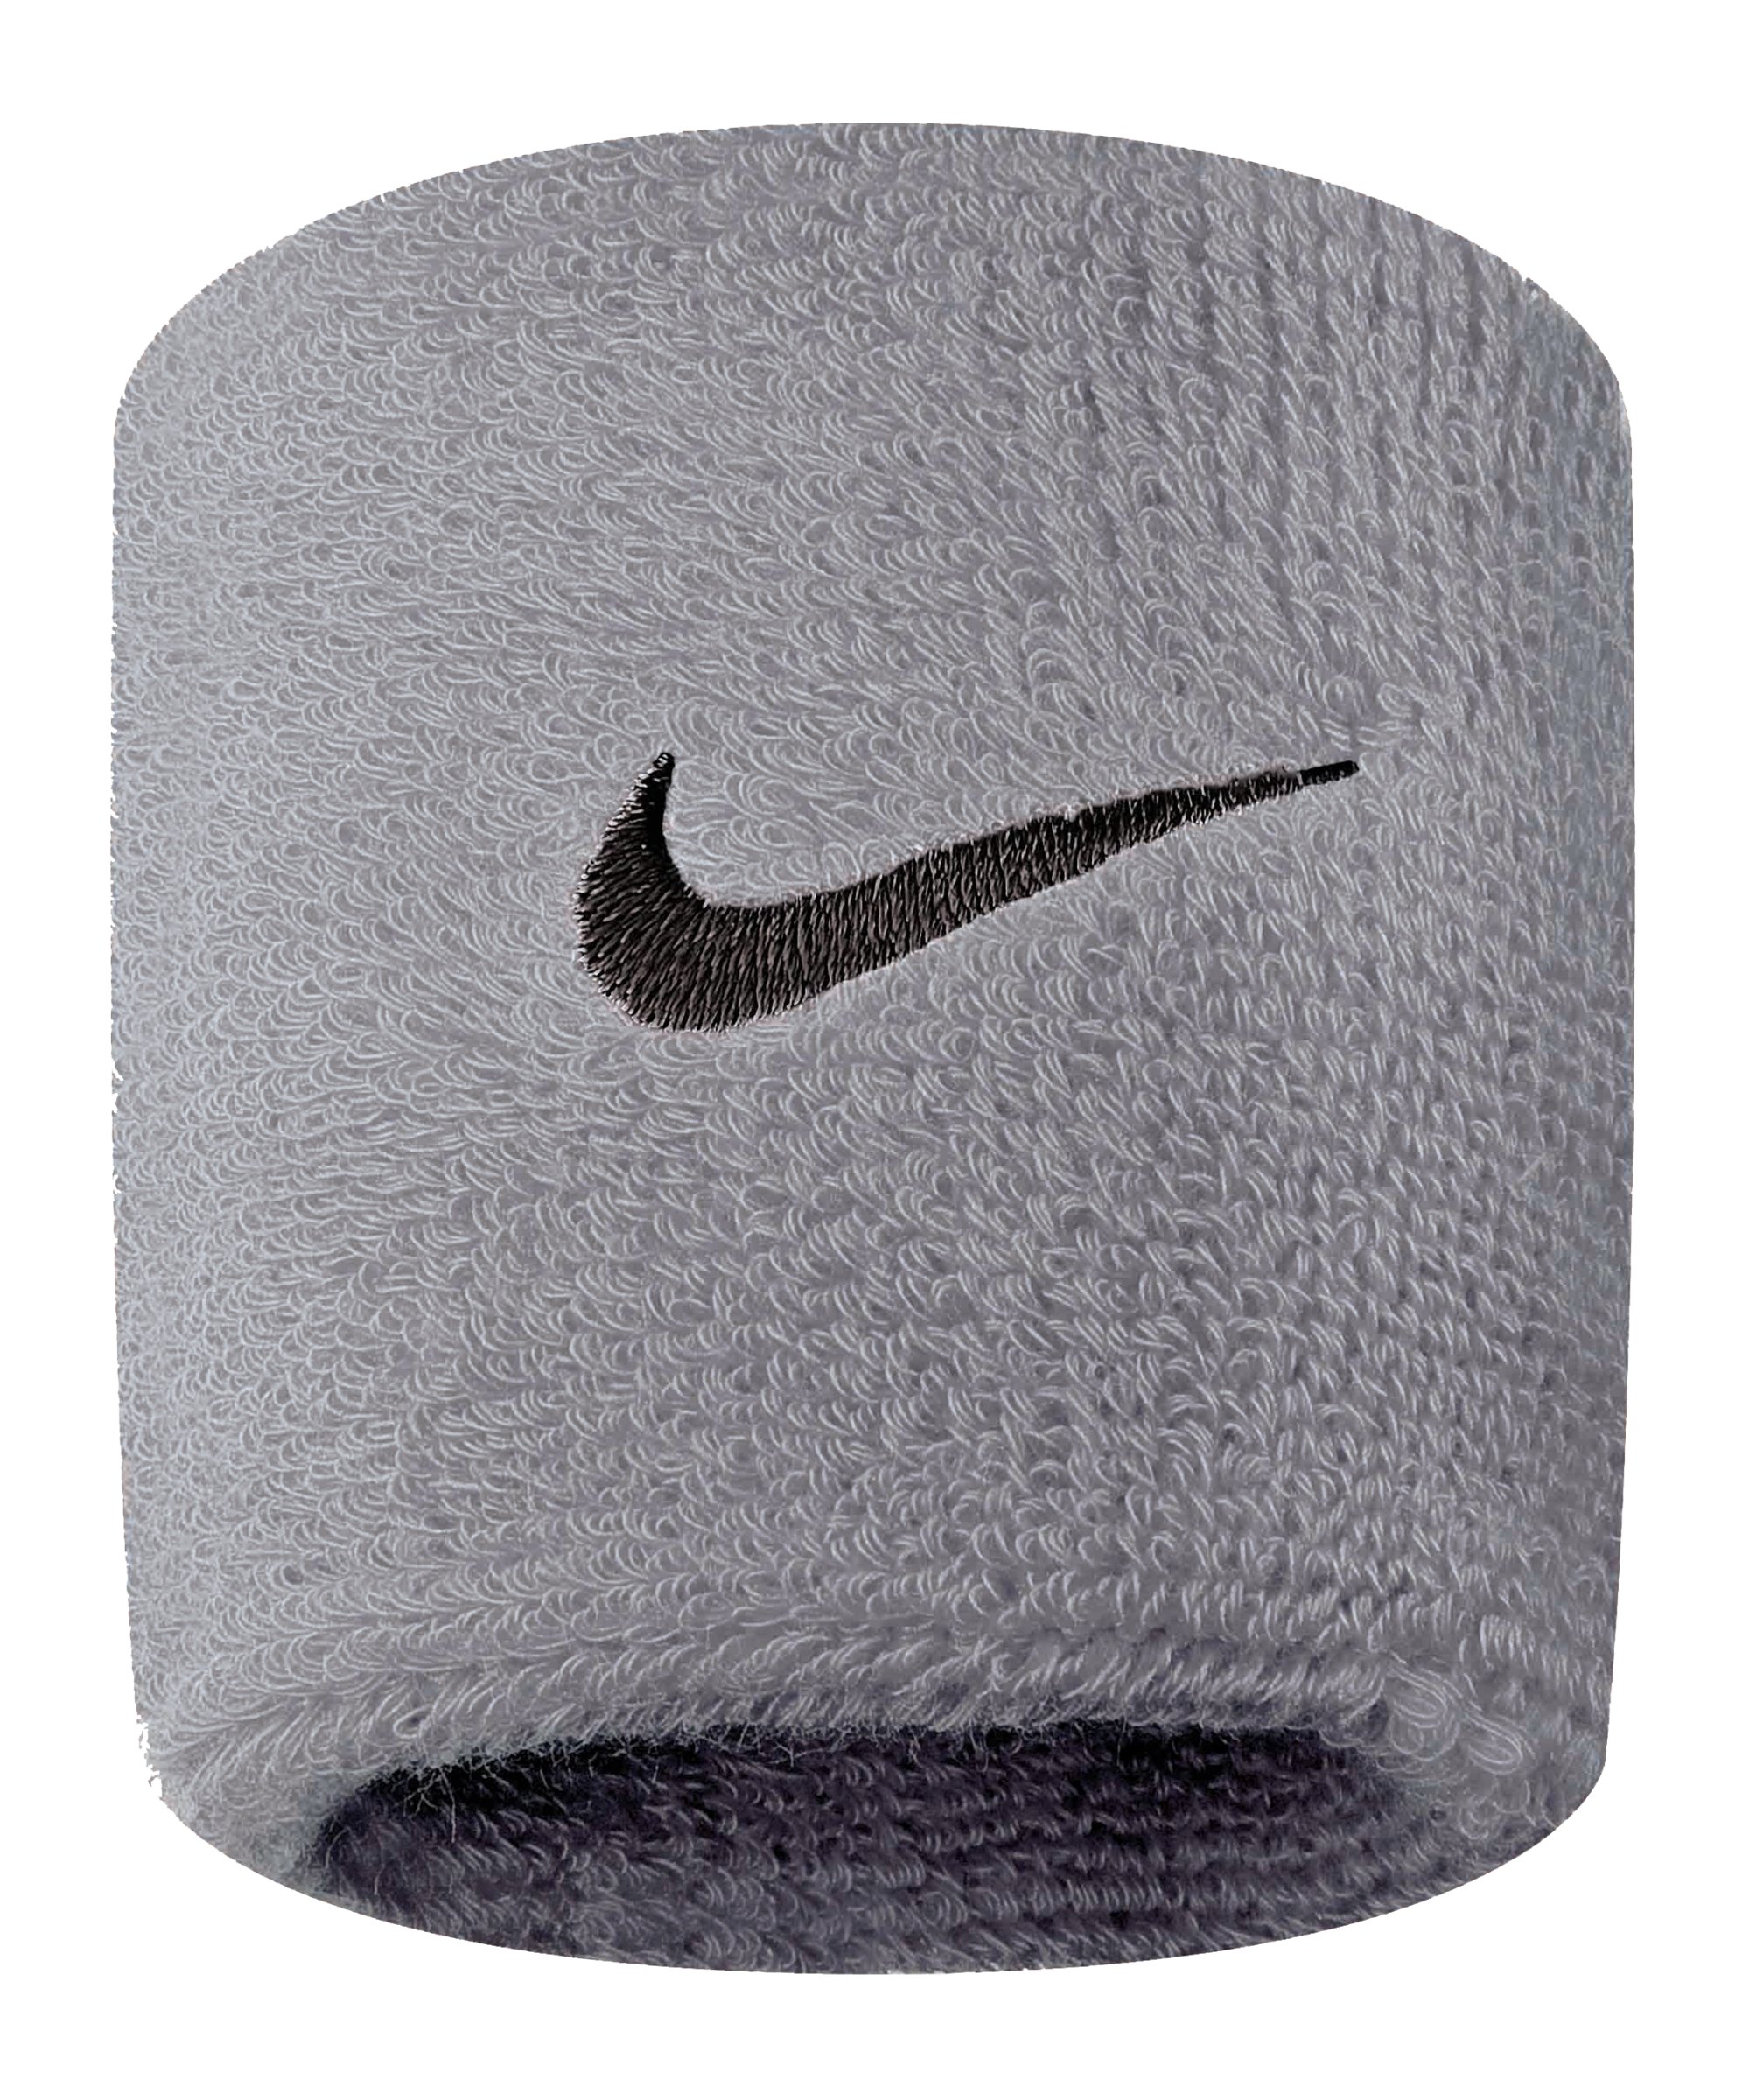 Nike Swoosh Wristbands Grau F051 - grau